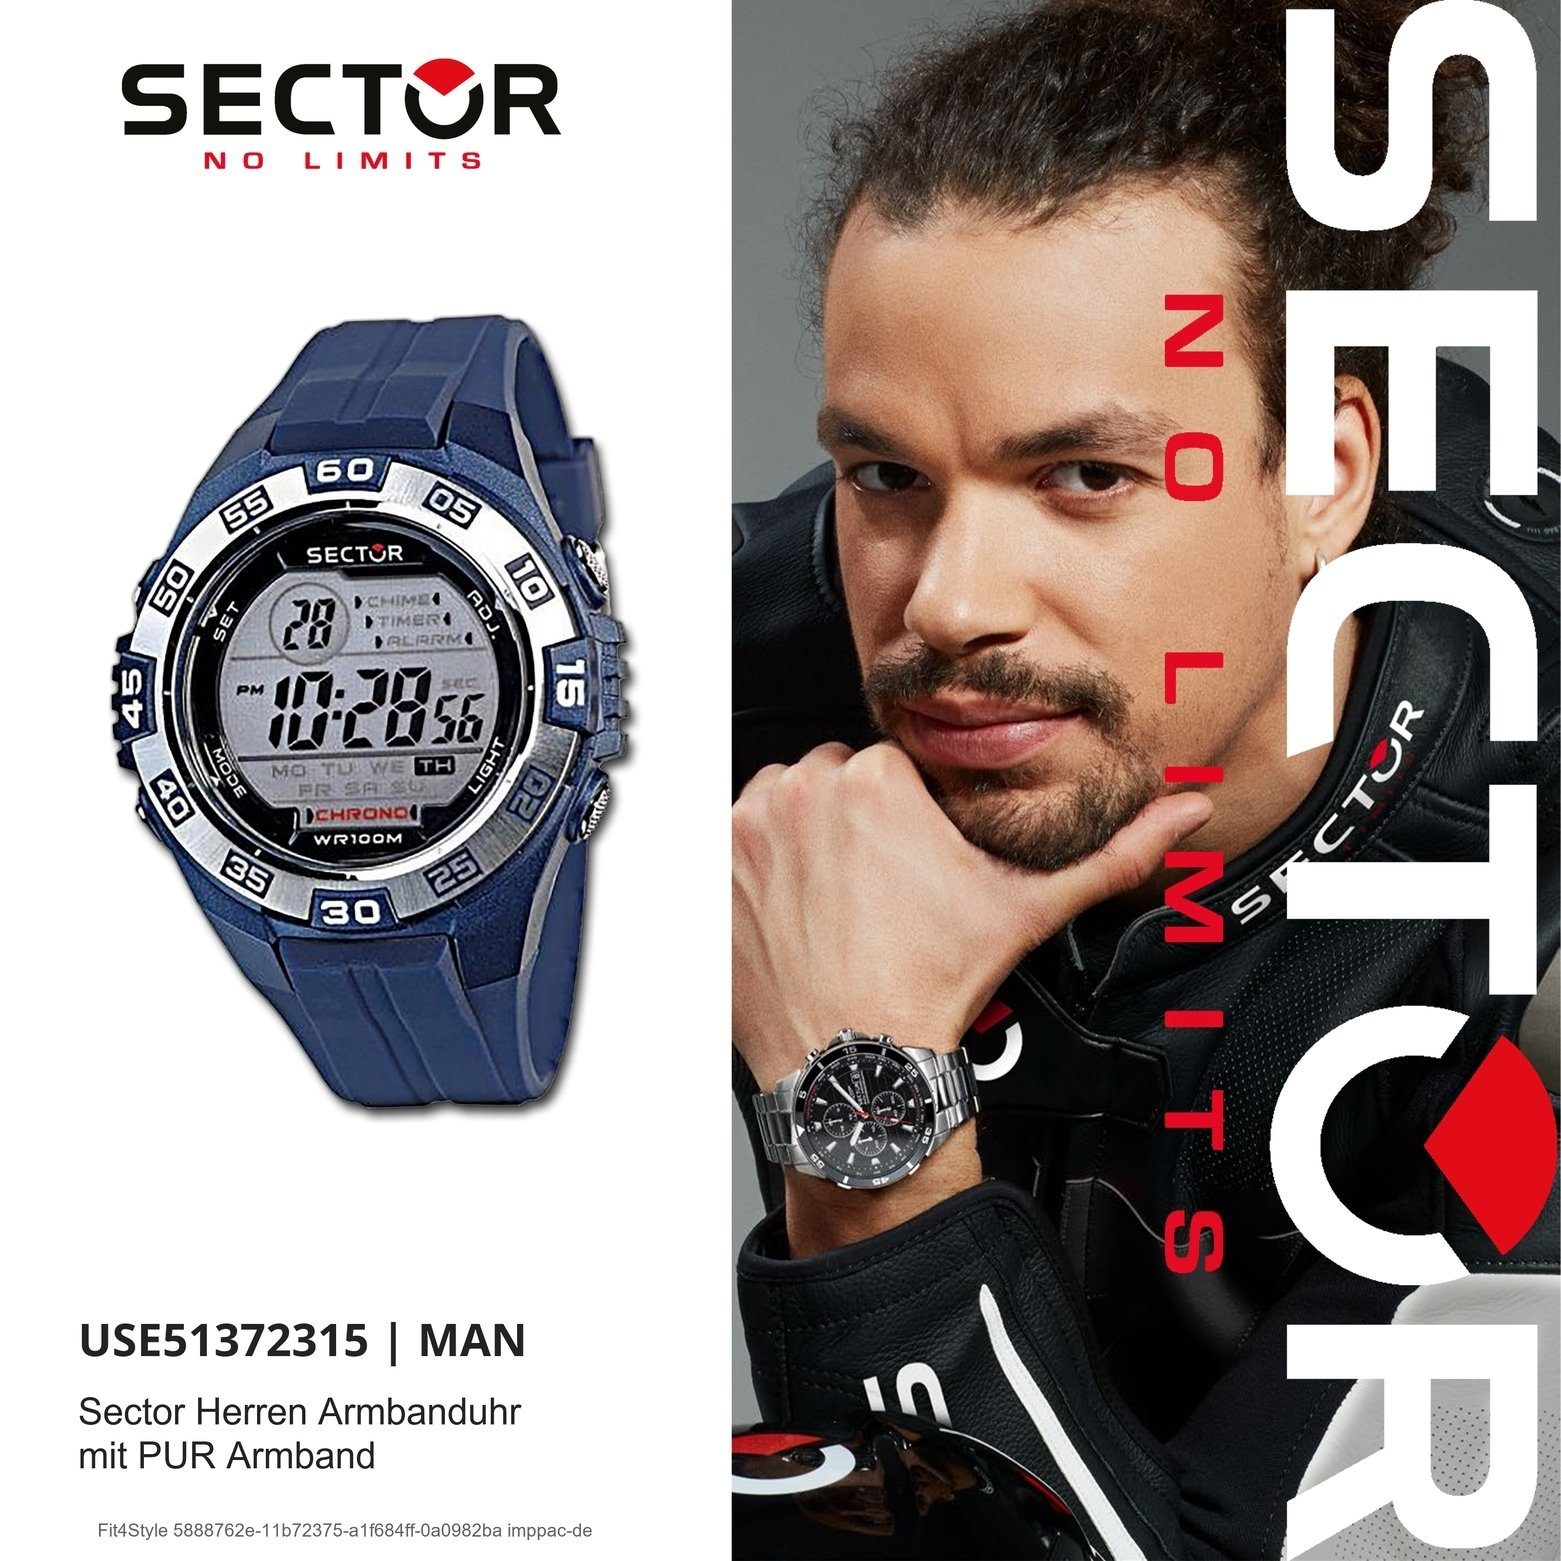 45mm), Sector Sector Armbanduhr rund, Digital, Herren Fashion Herren groß (ca. Armbanduhr blau, PURarmband Chronograph